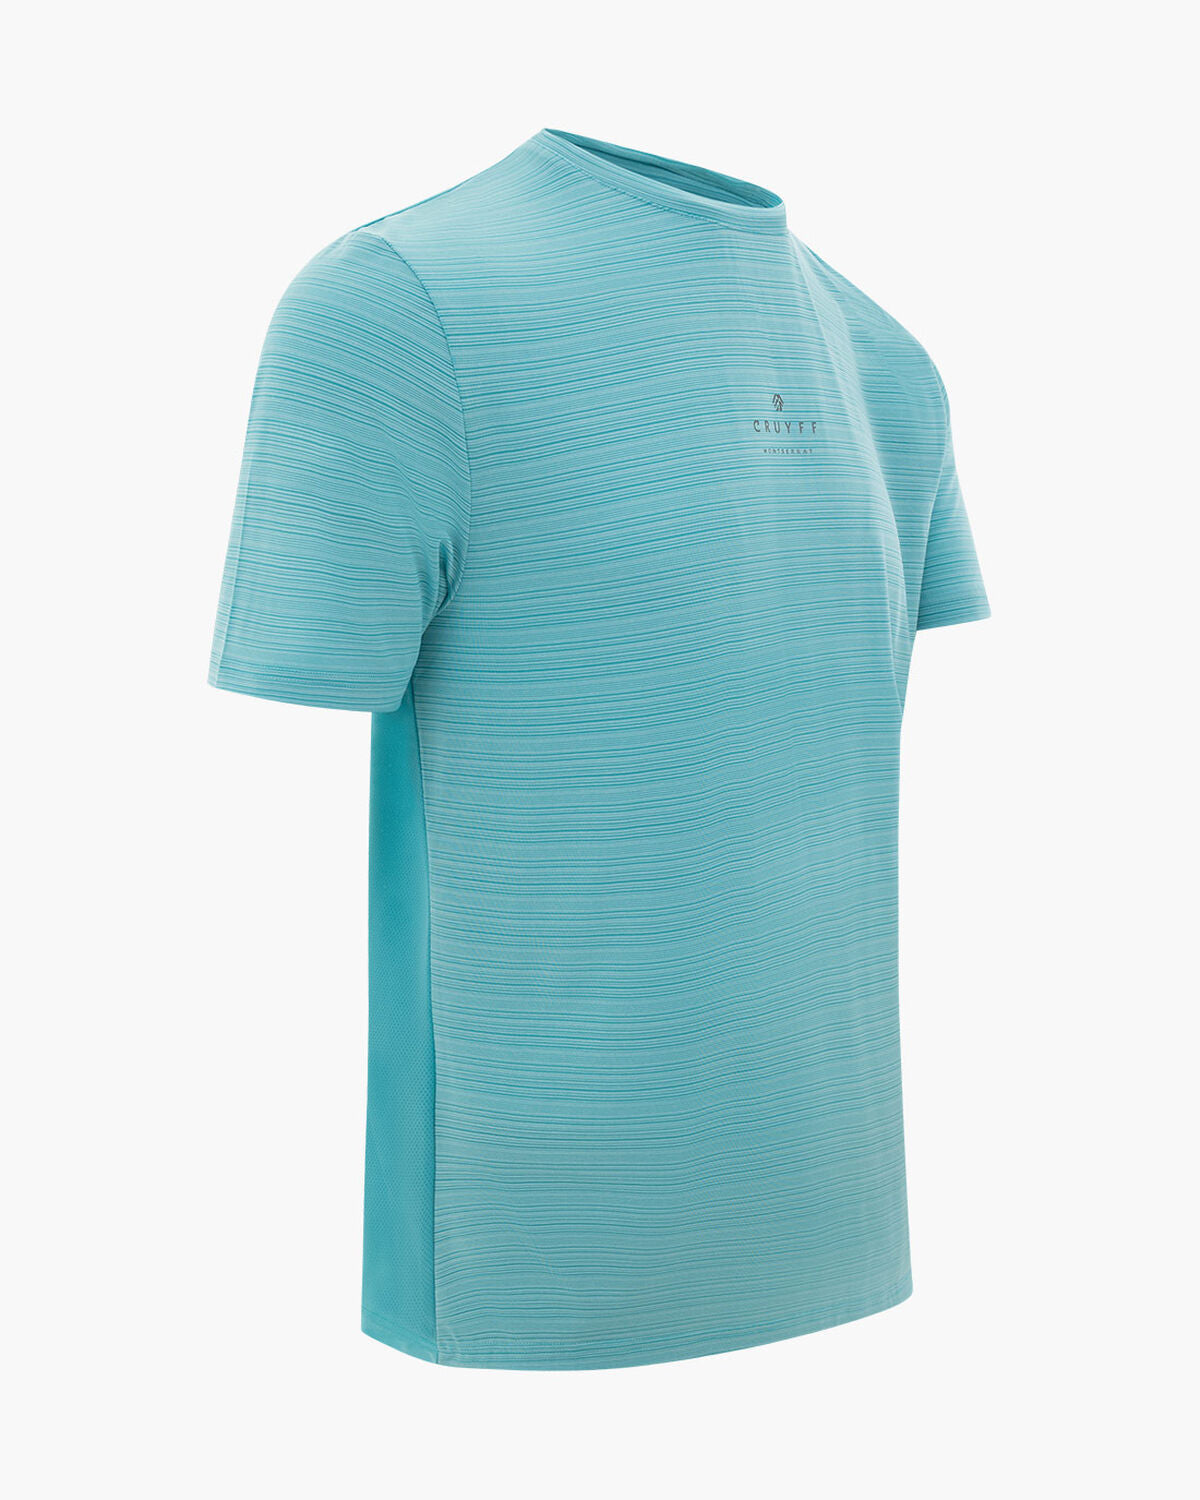 Cruyff Advance T-Shirt Sky Blue